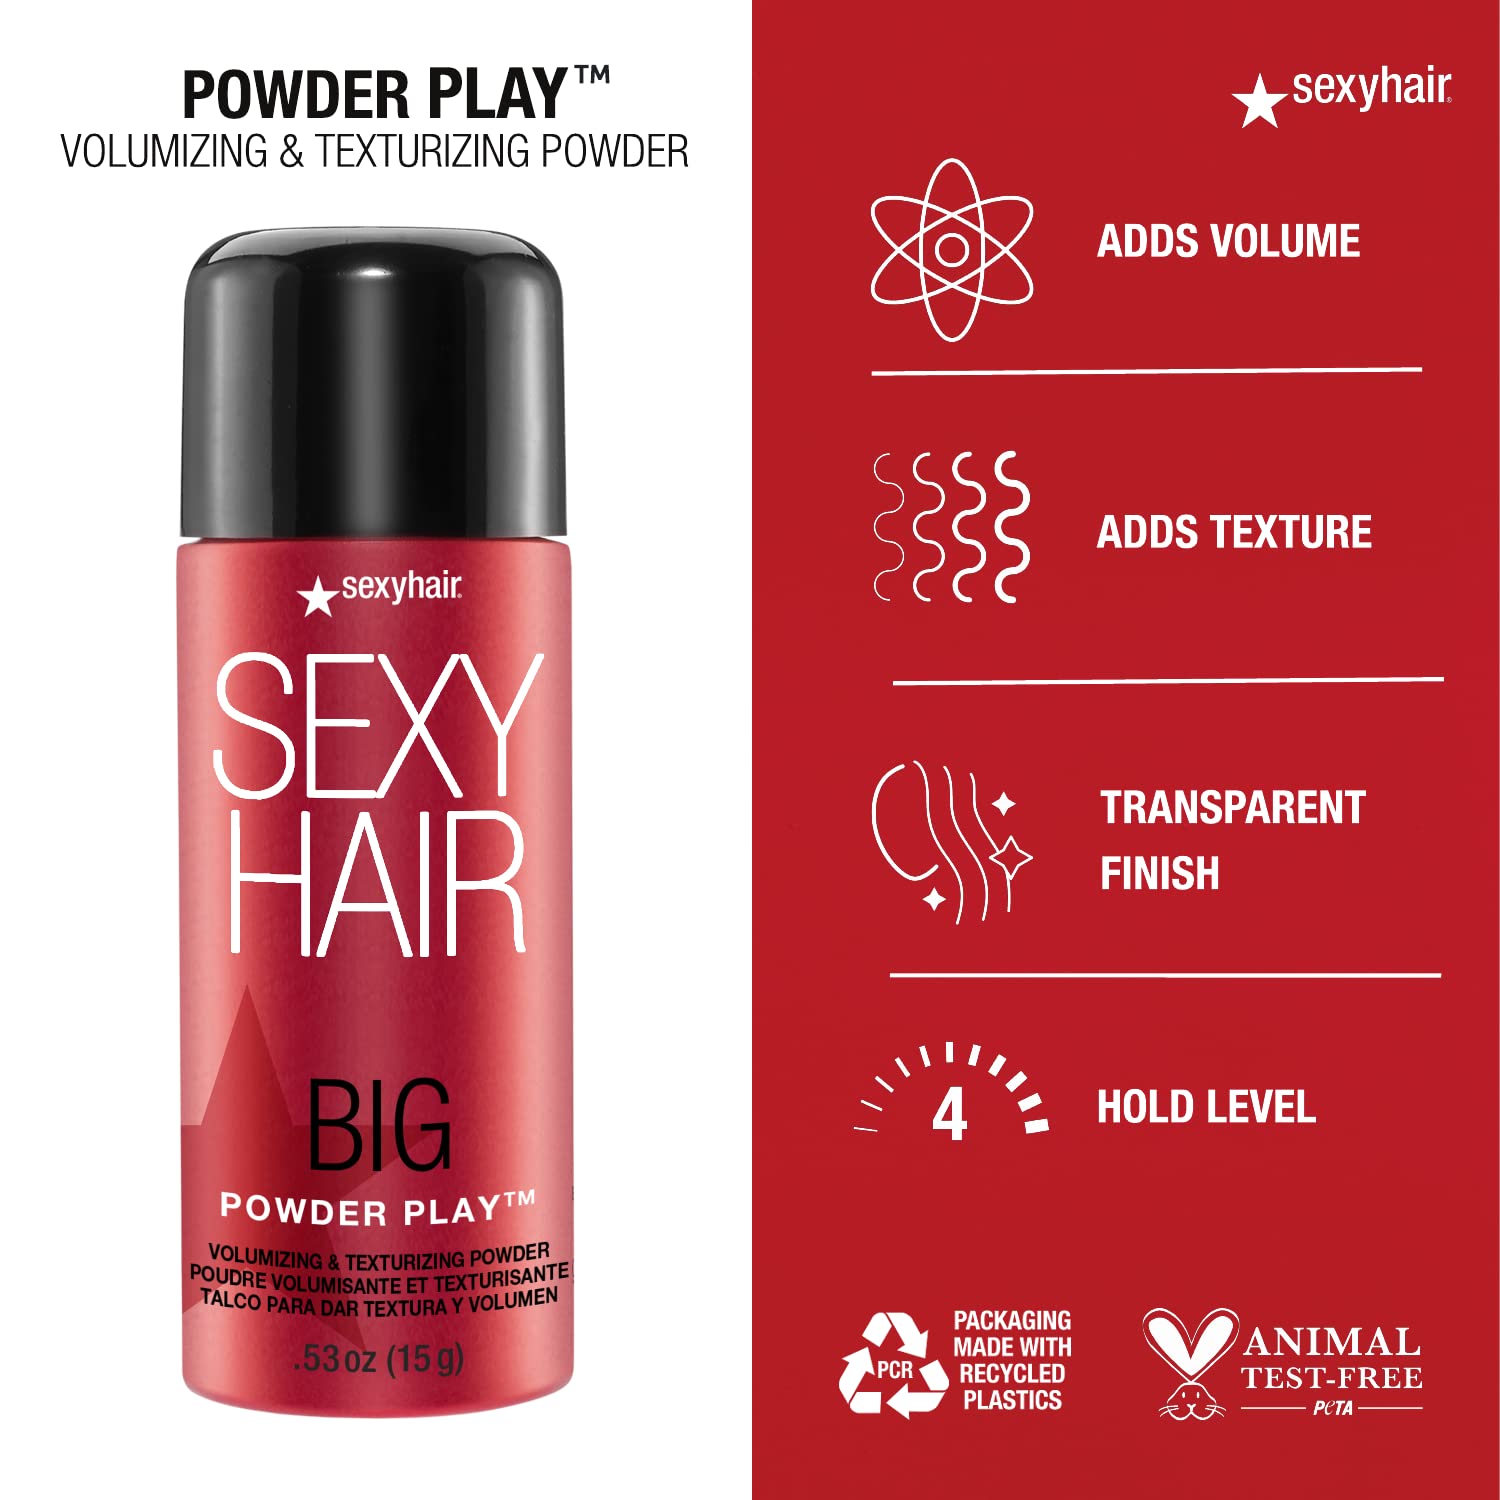 Big Sexy Hair Powder Play Volumizing & Texturizing Powder Key features